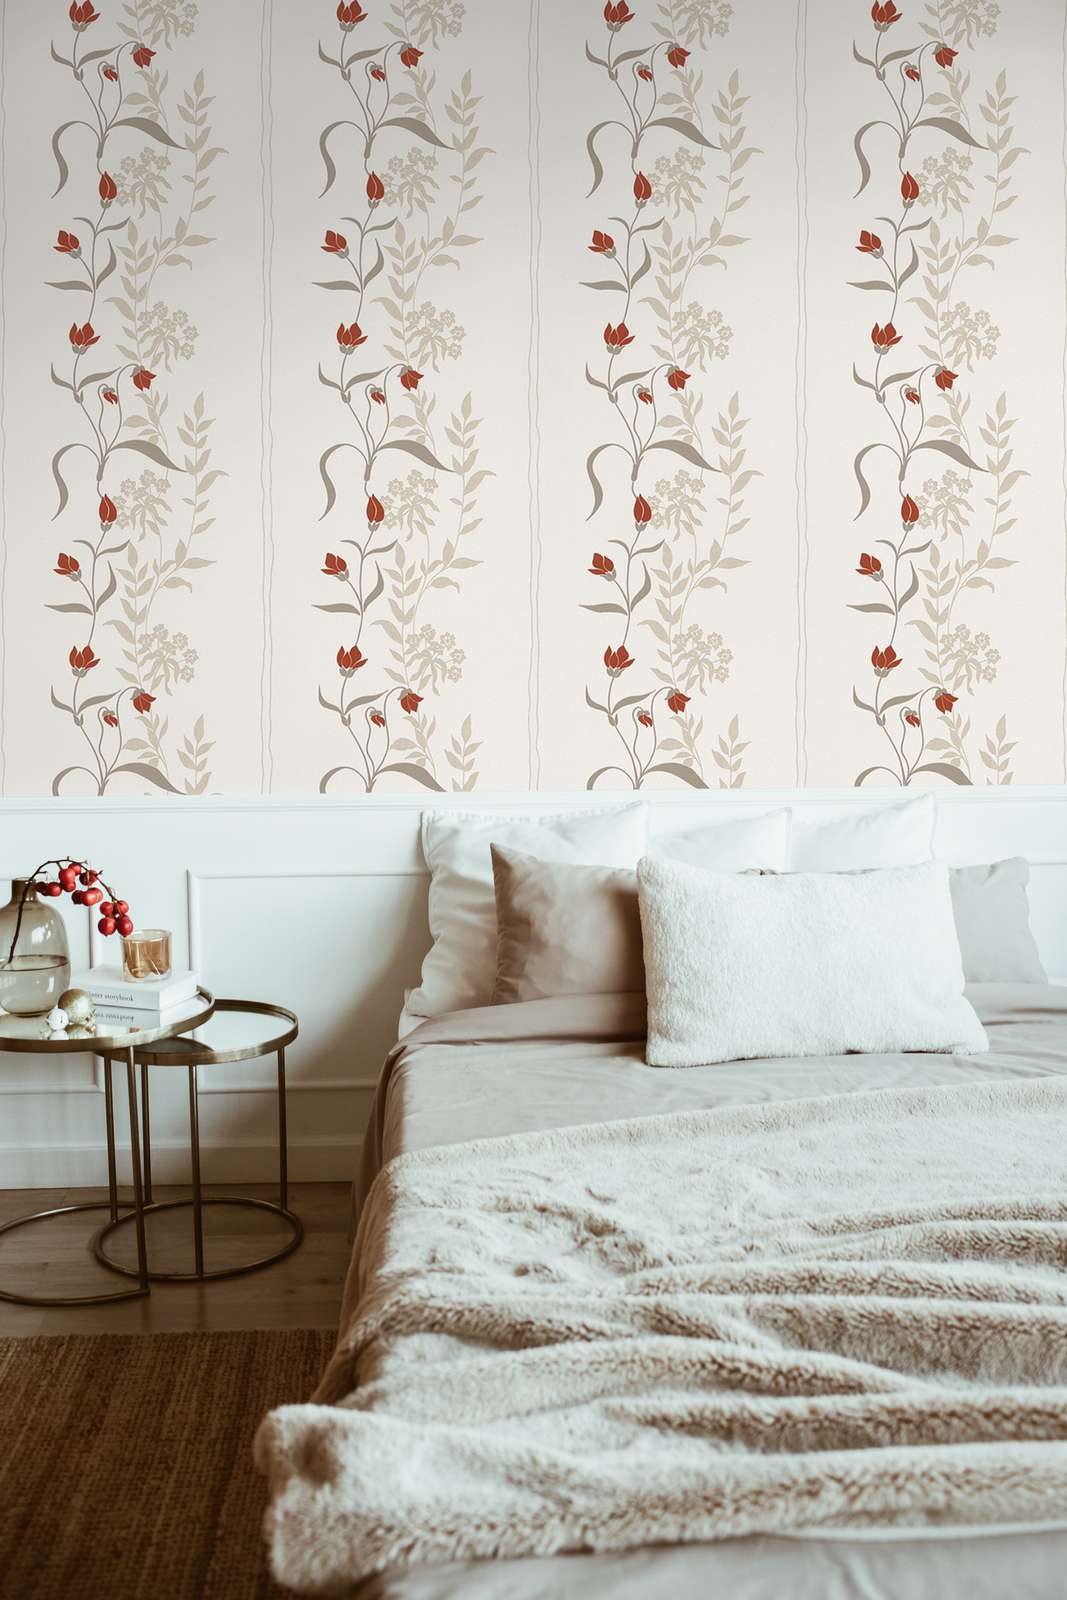             Living room wallpaper with flowers vines - beige, brown, red
        